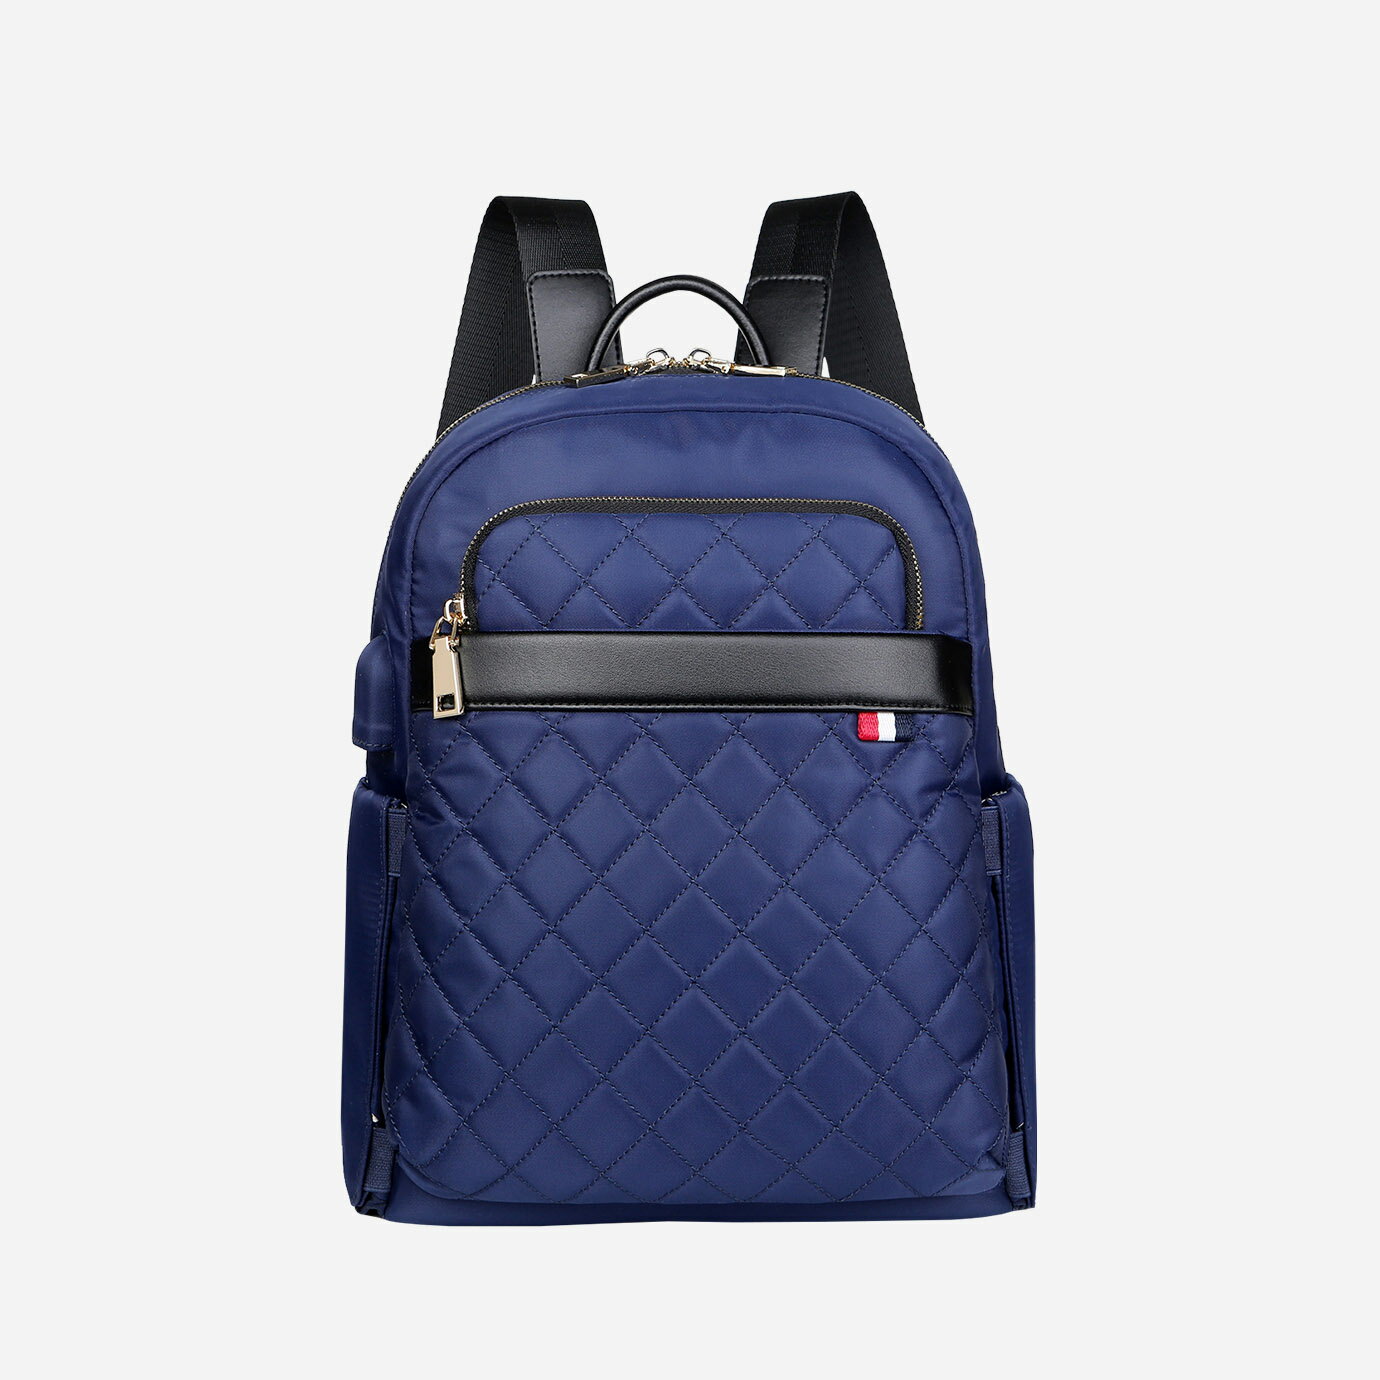 Nordace Ellie Mini- 後背包 充電雙肩包 雙肩包 筆電包 電腦包 旅行包 休閒包 防水背包 7色可選-藍色 1